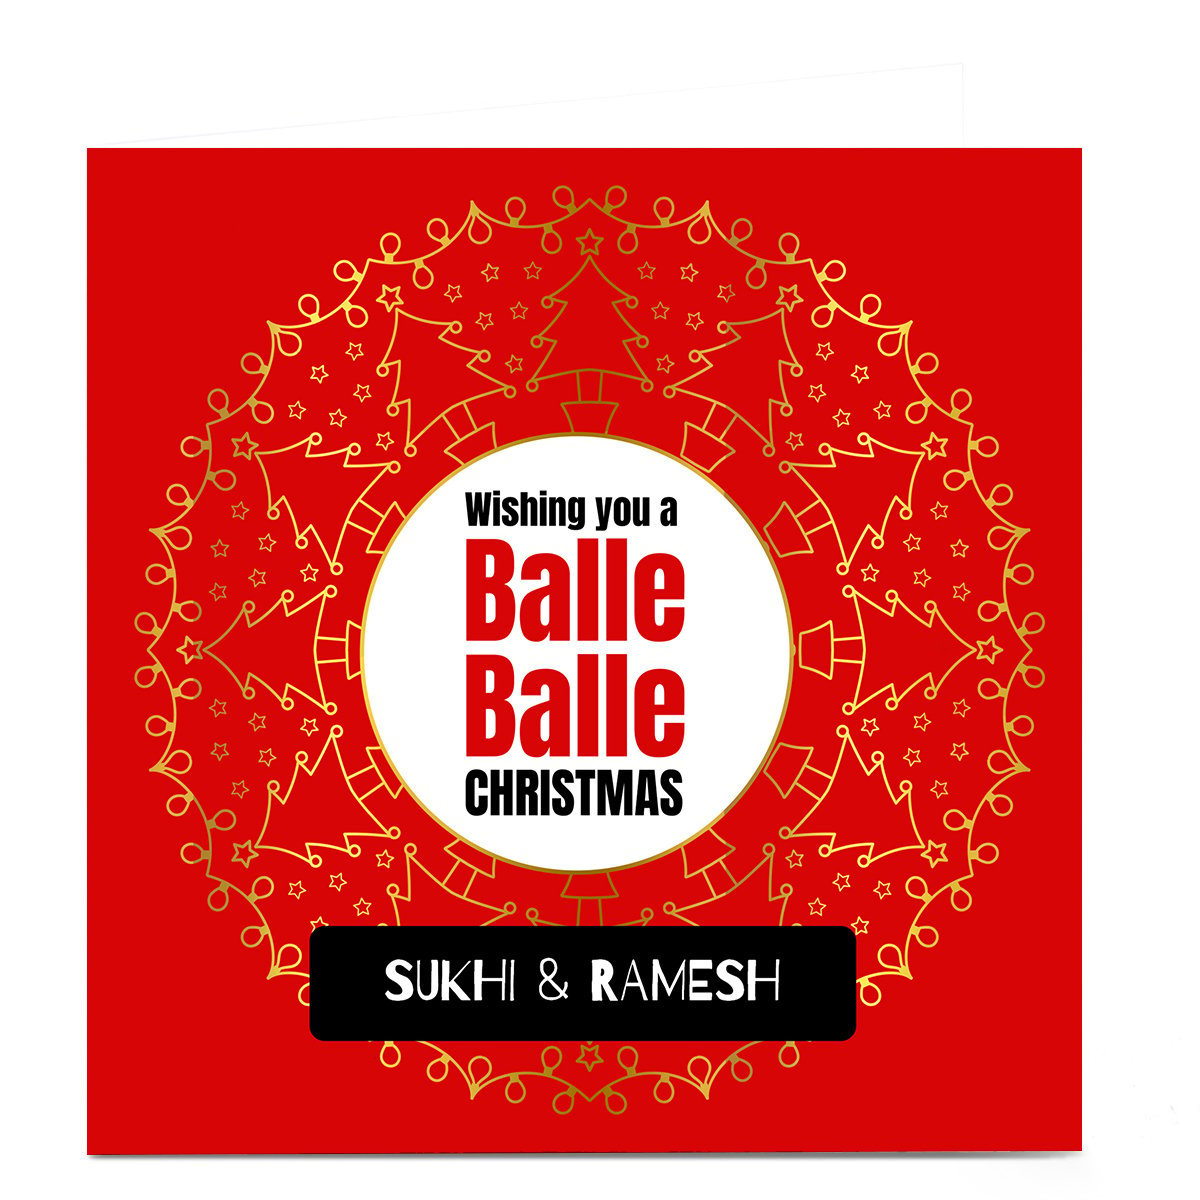 Personalised Roshah Designs Christmas Card - Balle Balle 